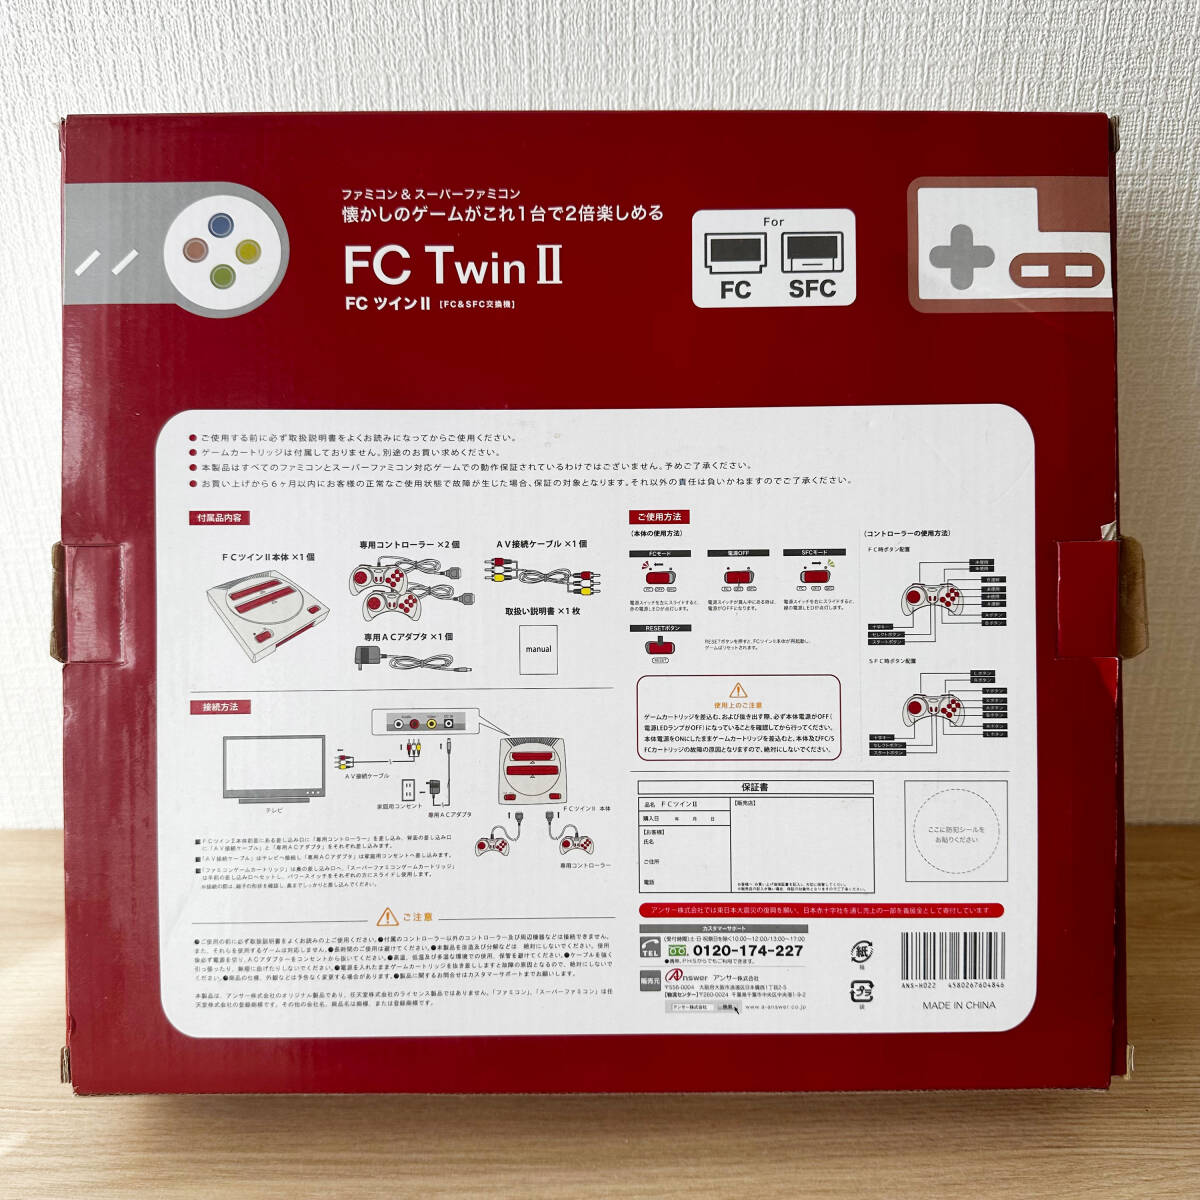 T666 動作確認済 美品 アンサー FC Twin II FC SFC 互換機 FCツイン2 ファミコン スーパーファミコン ゲーム機 の画像4